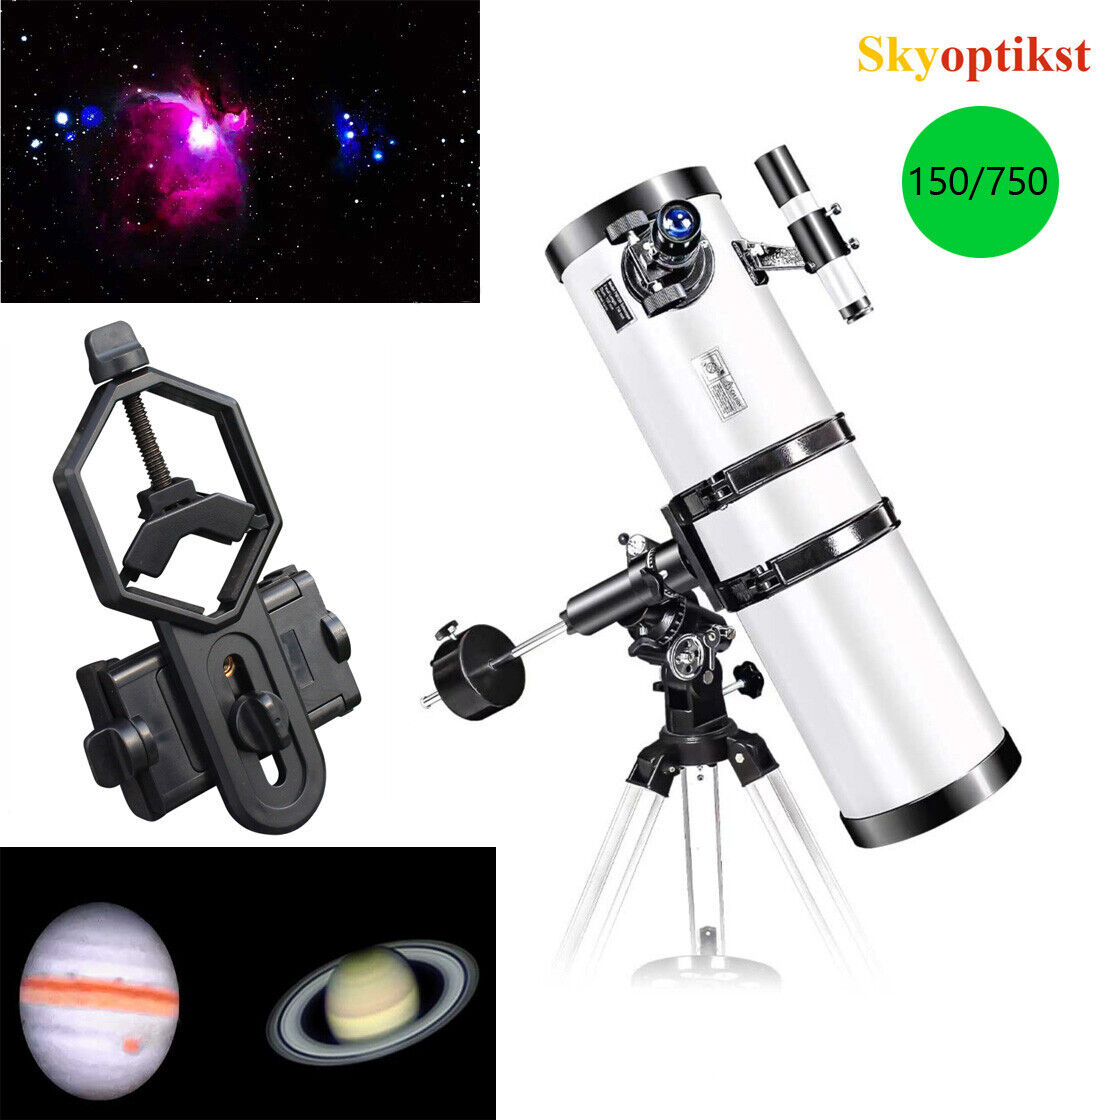 Skyoptimkst 150x750 Astronomical telescope Newtonian reflector sky Phone adapter